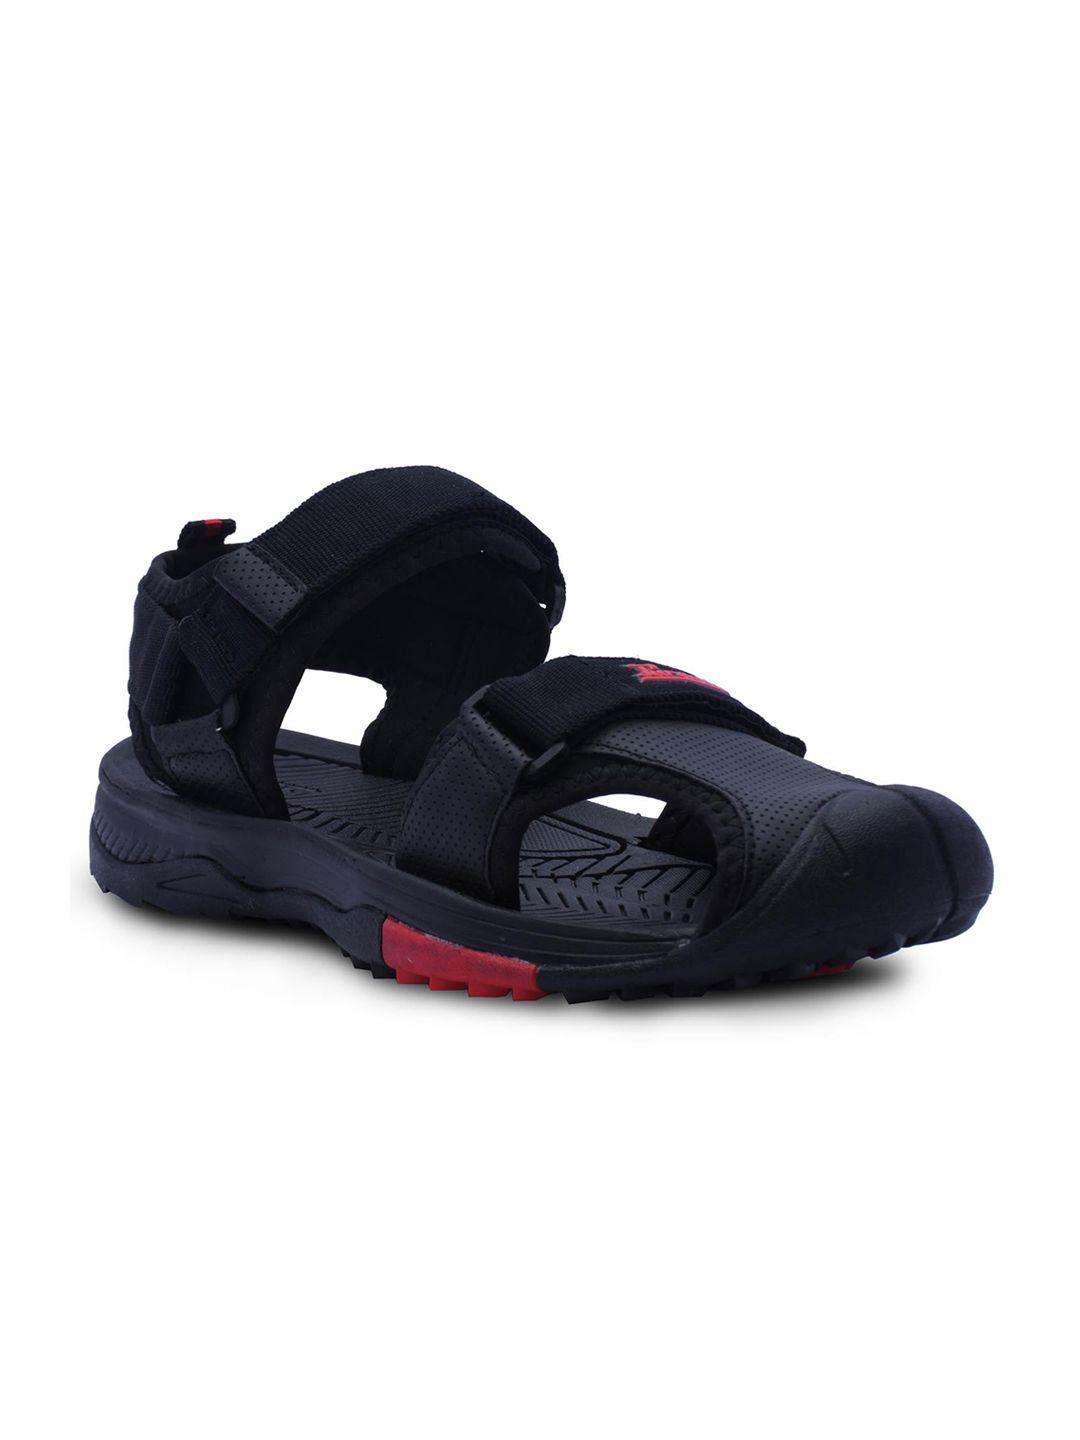 paragon men velcro casual comfort sandals